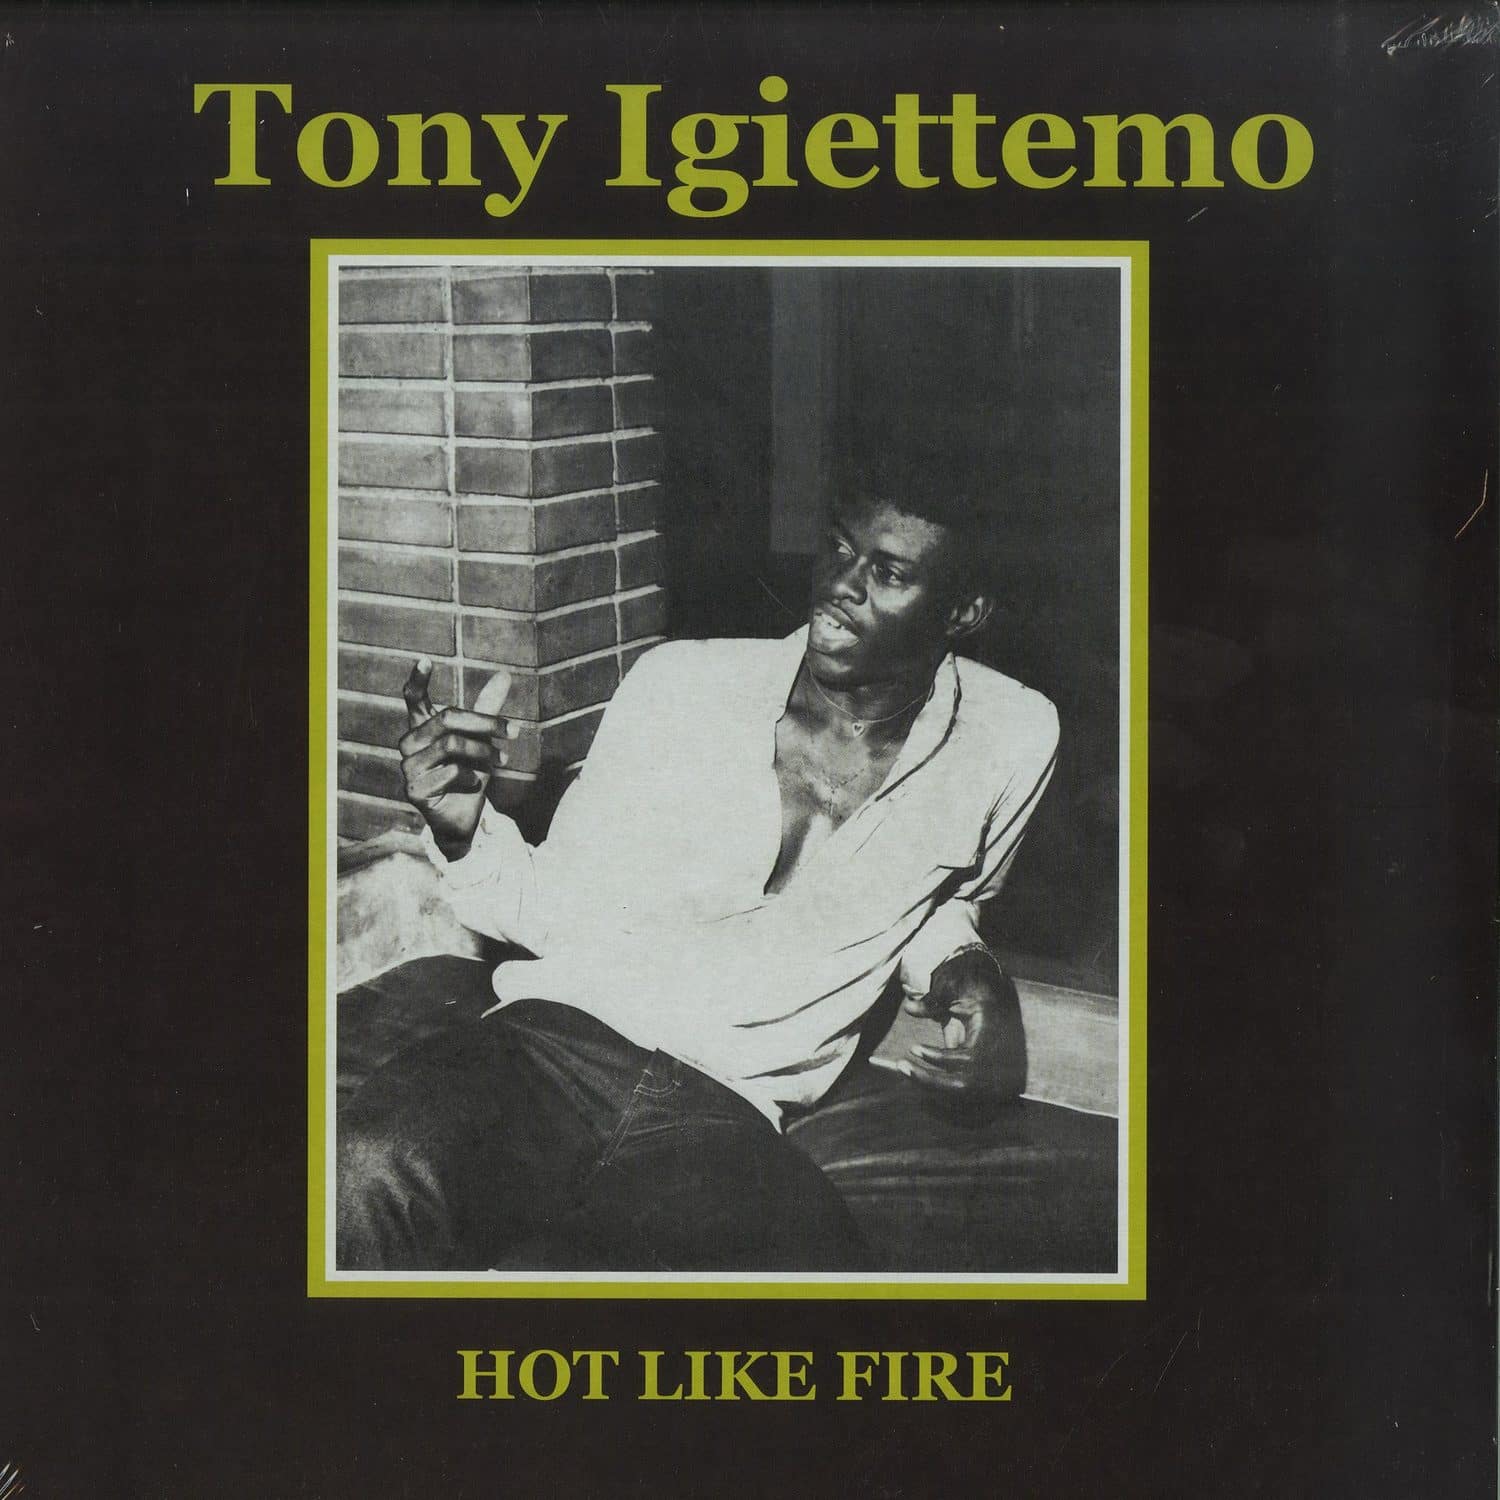 Tony Igiettemo - HOT LIKE FIRE 